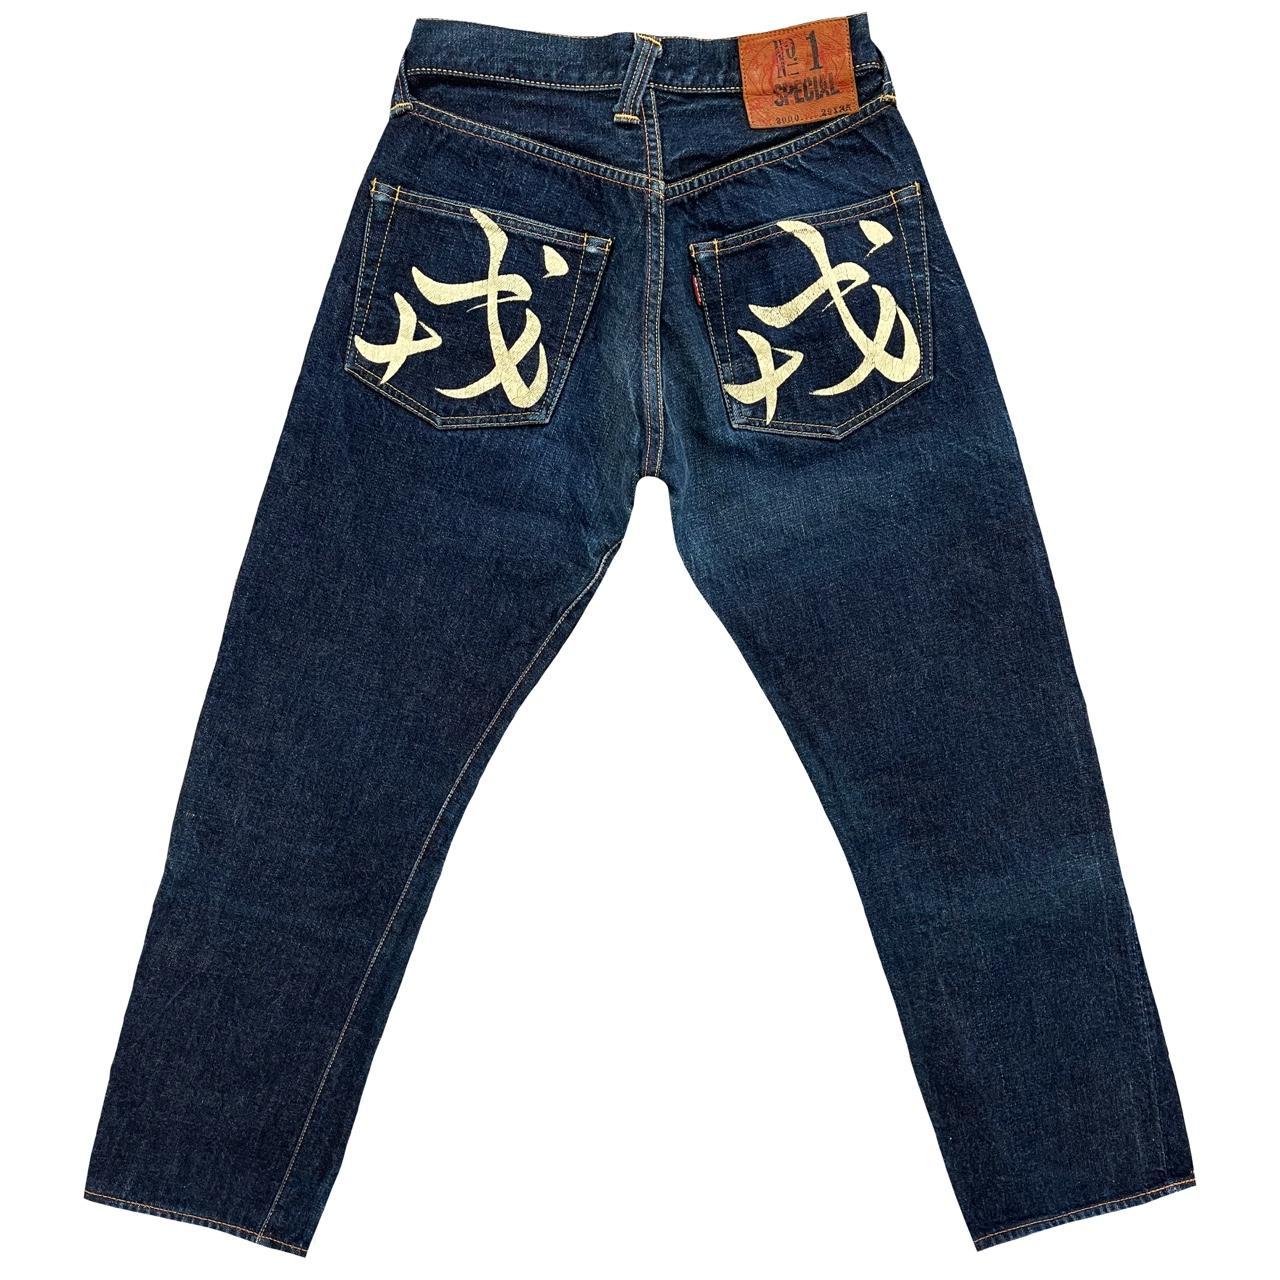 Evisu Jeans Katakana lettering on back pockets.... - Depop